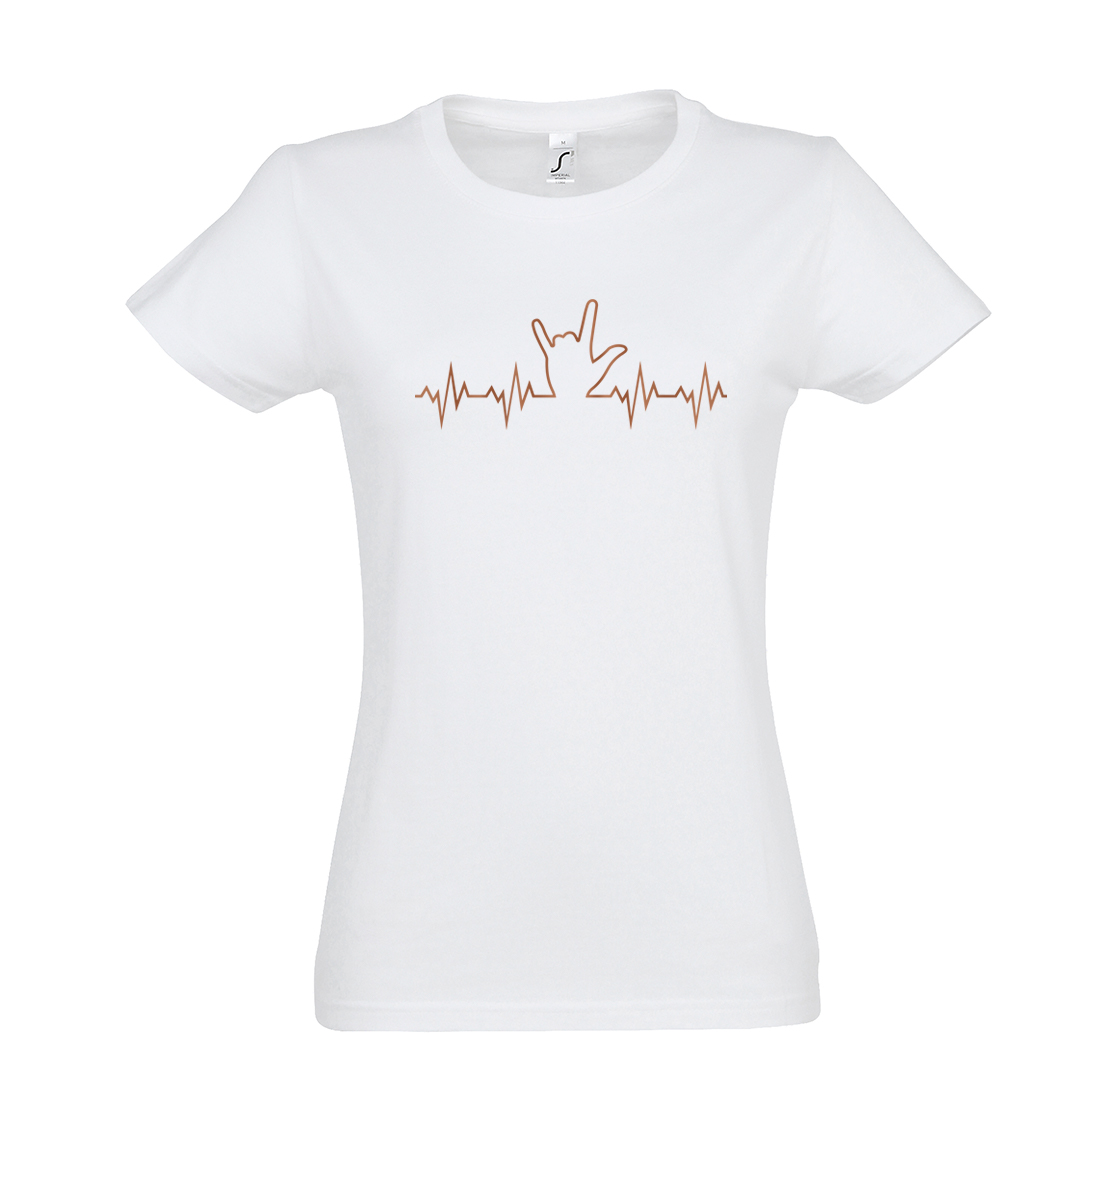 Damen T-Shirt Herzschlag – ILY laserfreaks17 –